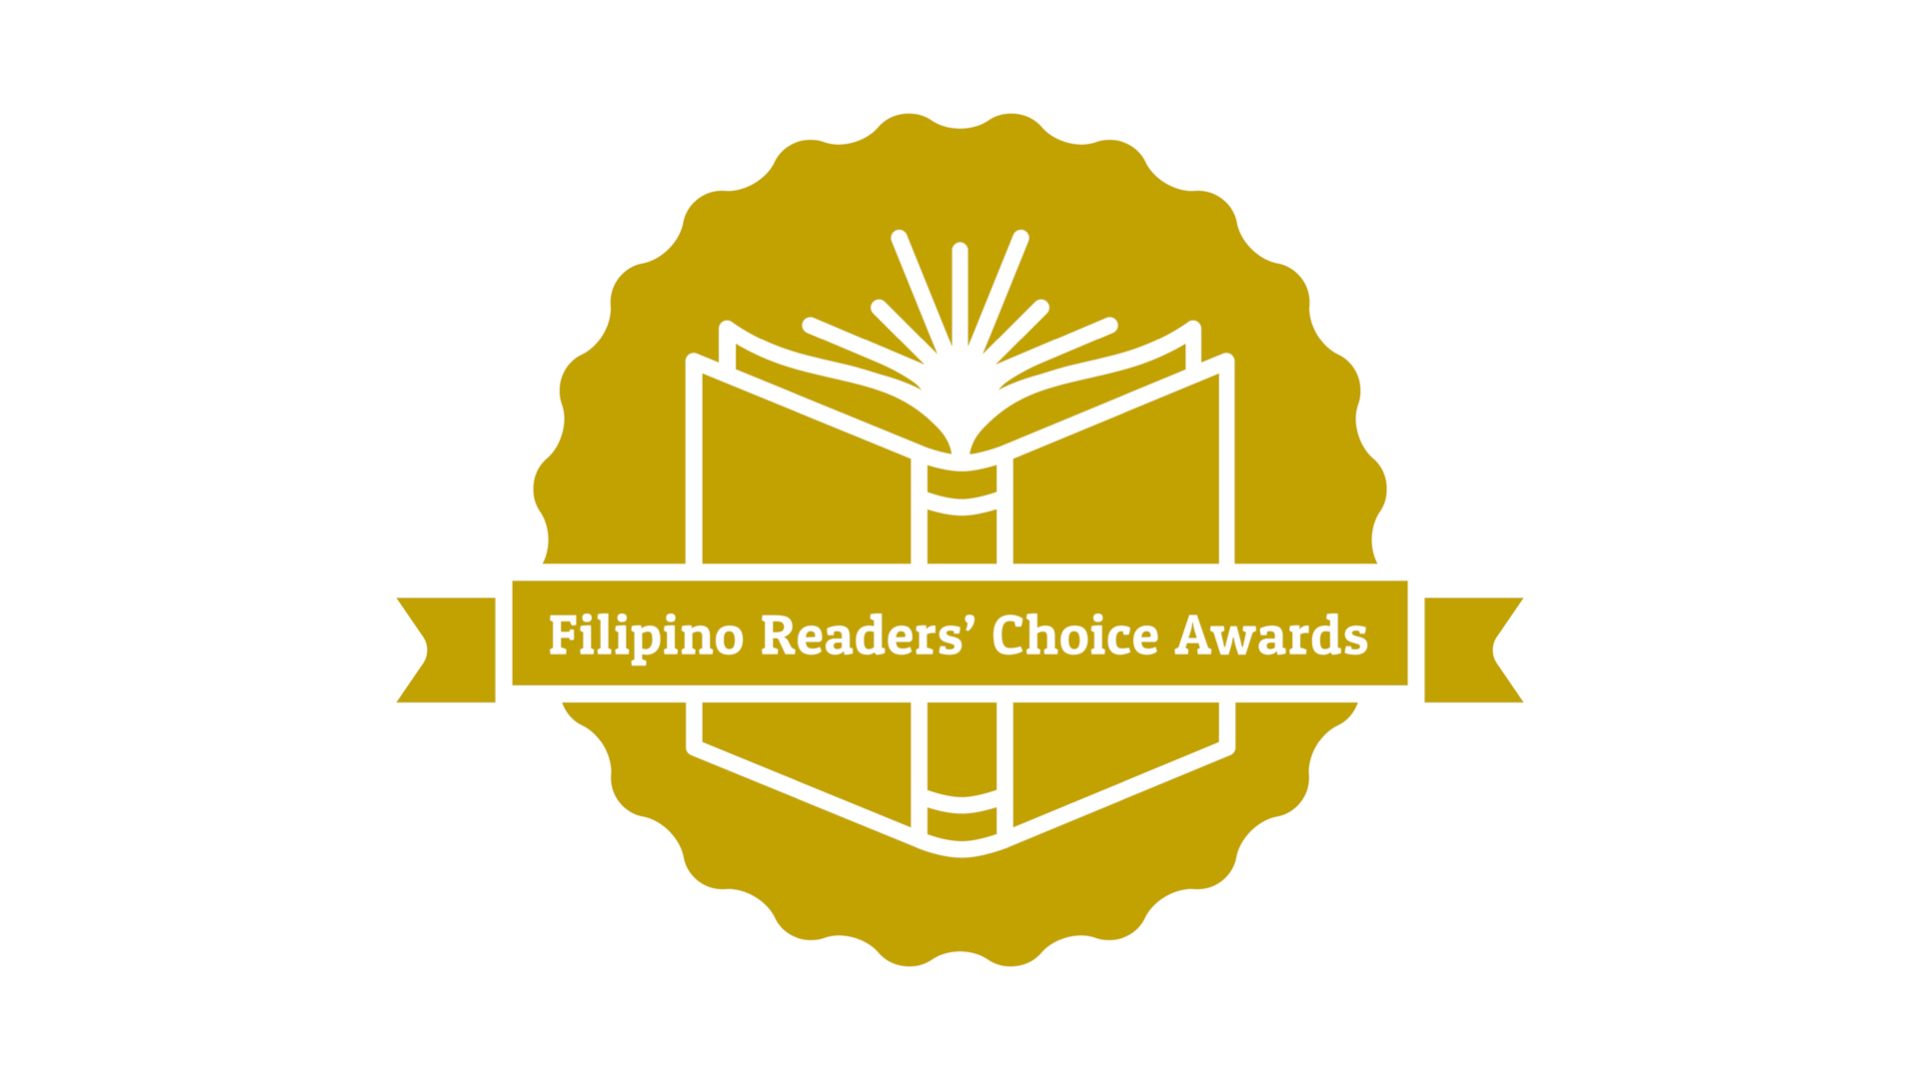 Filipino Readers’ Choice Awards returns this 2022